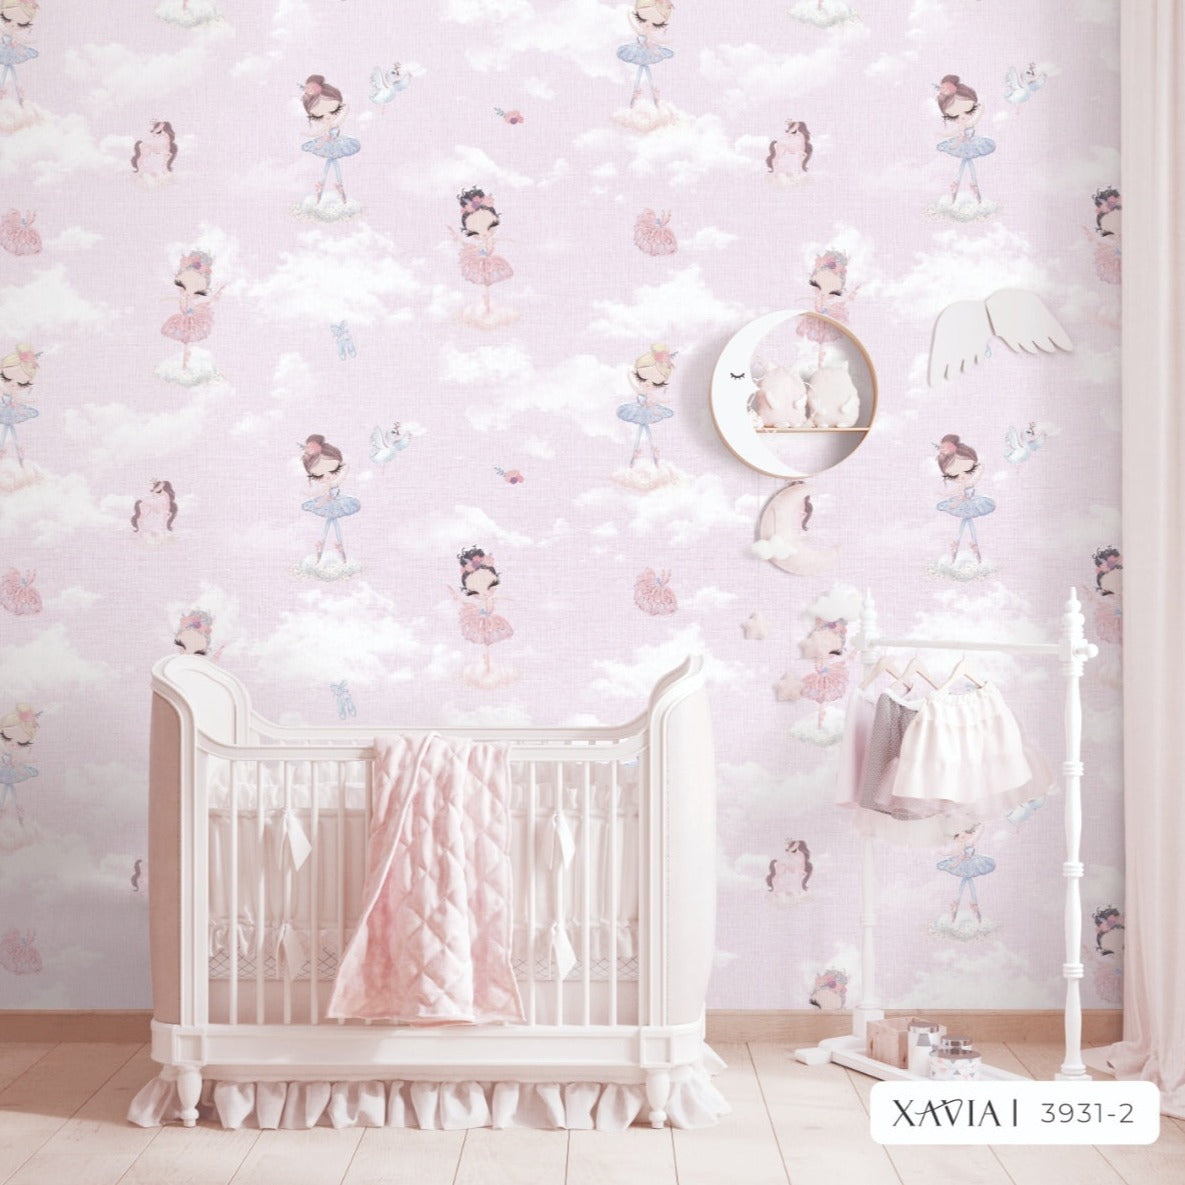 Ballerina and Pink Clouds Wallpaper (Xavia 3931-2J)